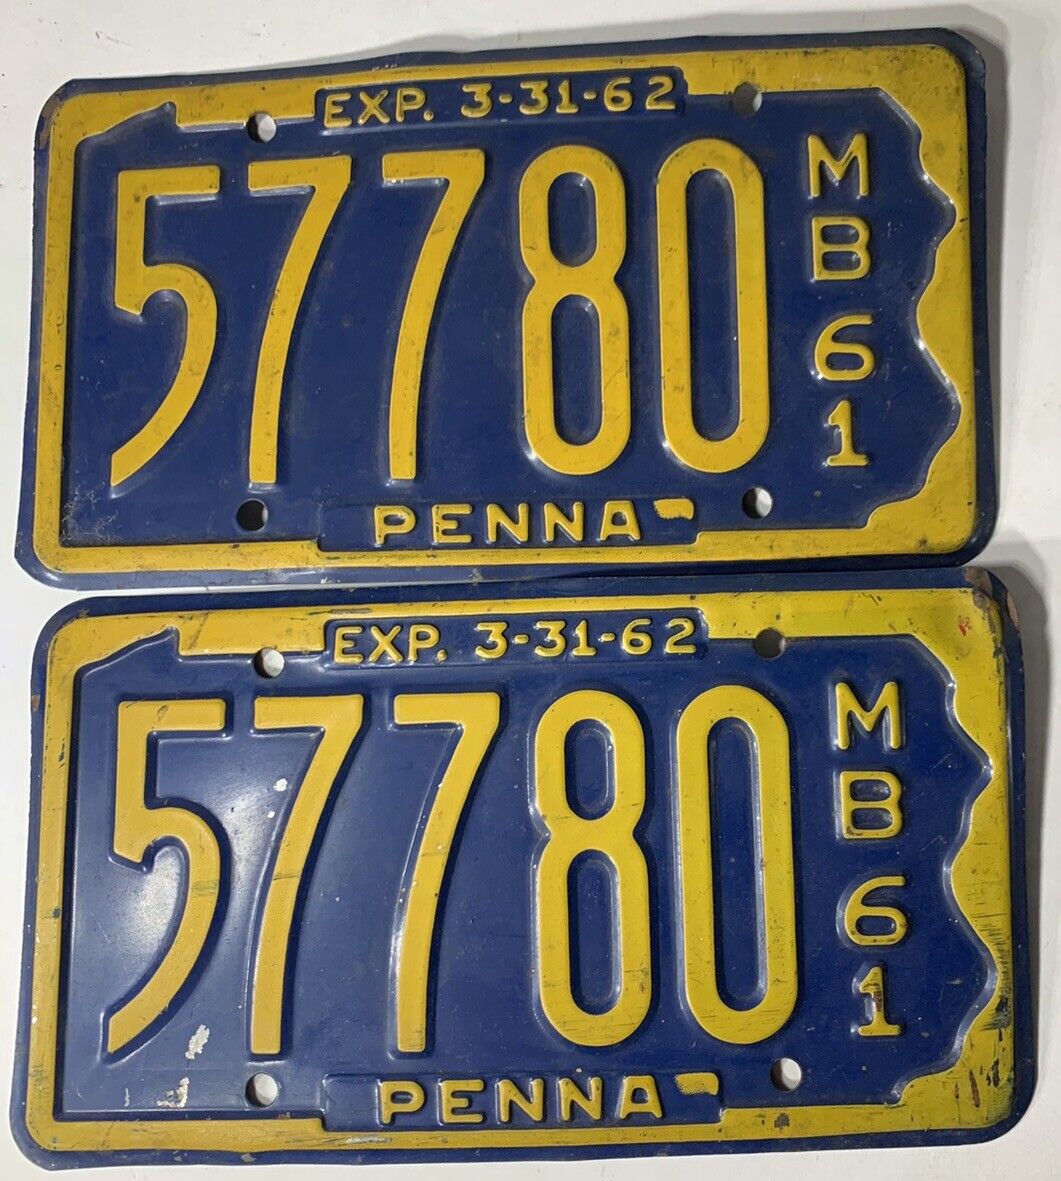 Antique Pennsylvania Motor Boat Plates - 1961 PAIR - “PENNA” #57780 - Good Cond.